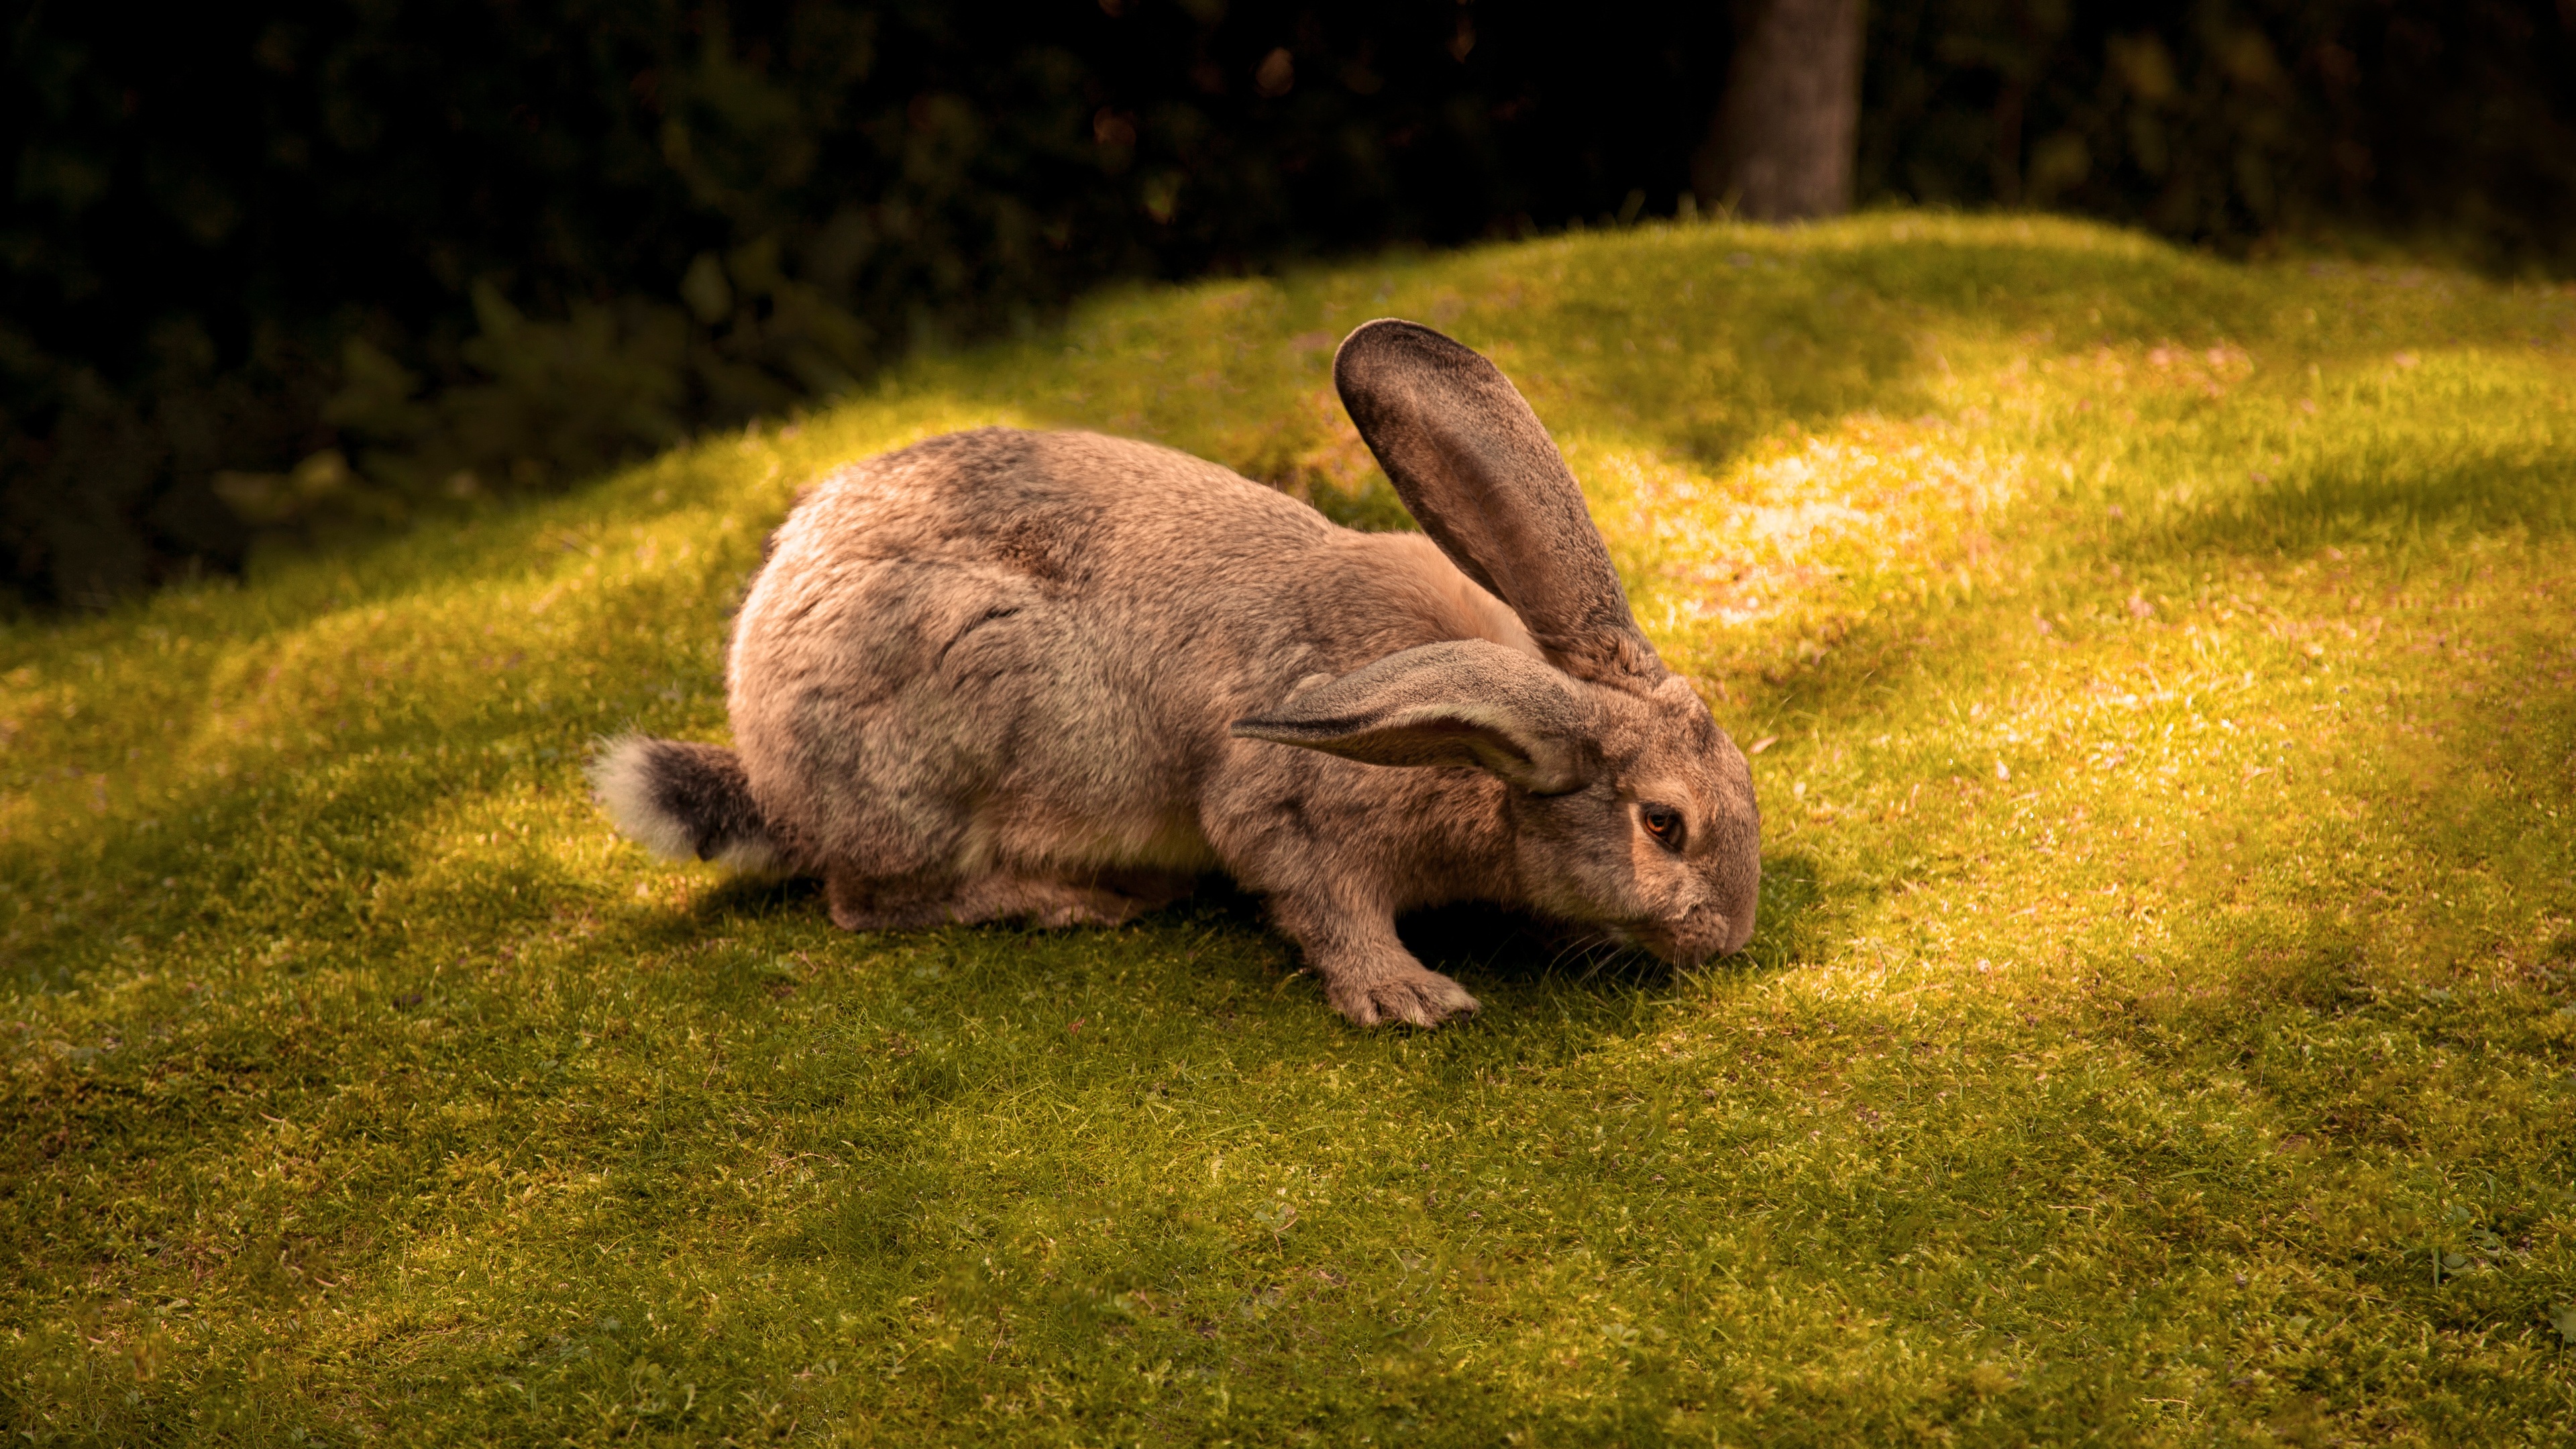 Wallpaper Peter Rabbit, 4k, Movies #16110